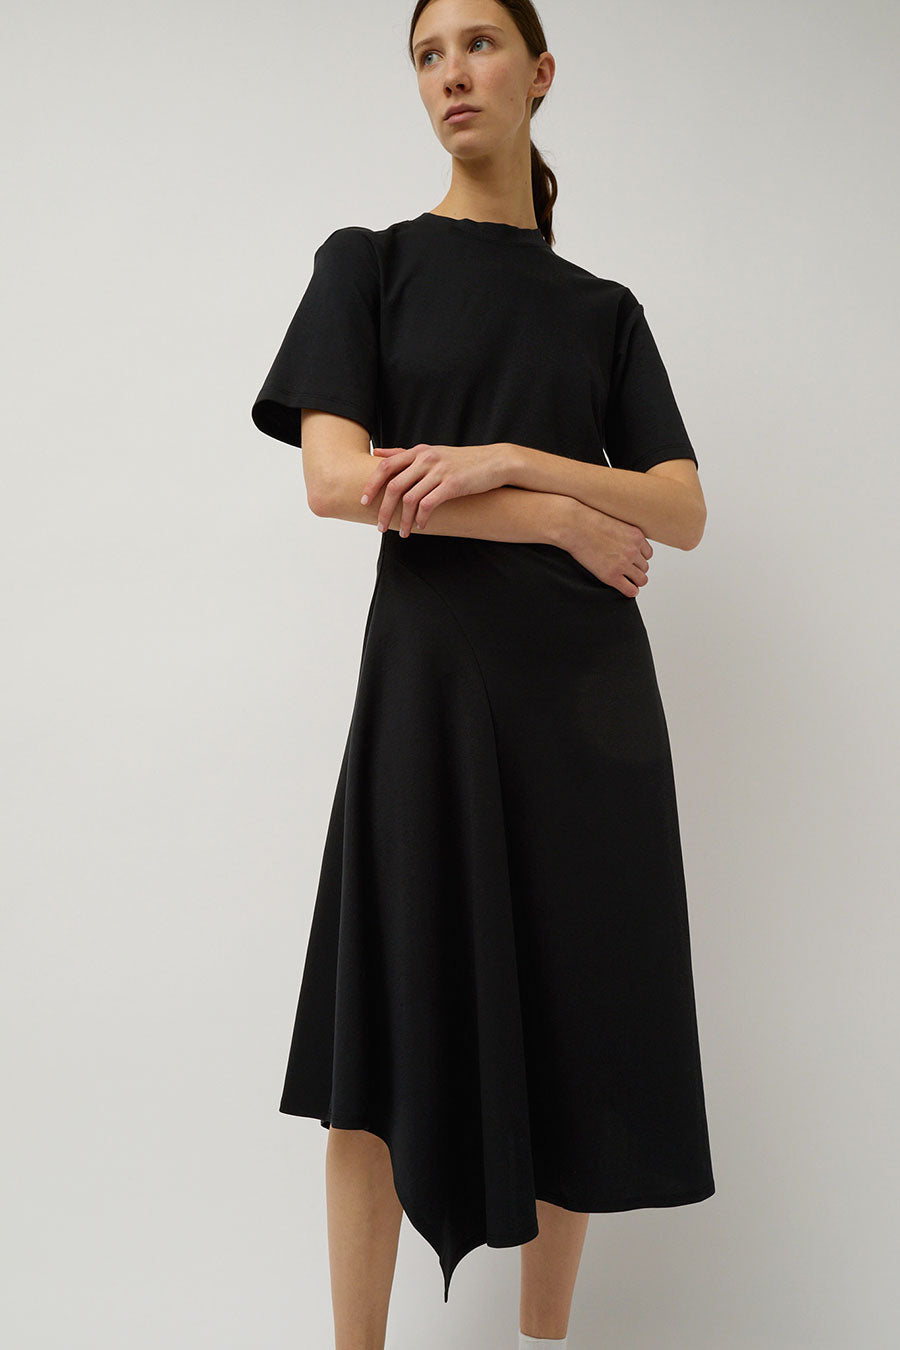 No.6 Martine Dress in Black